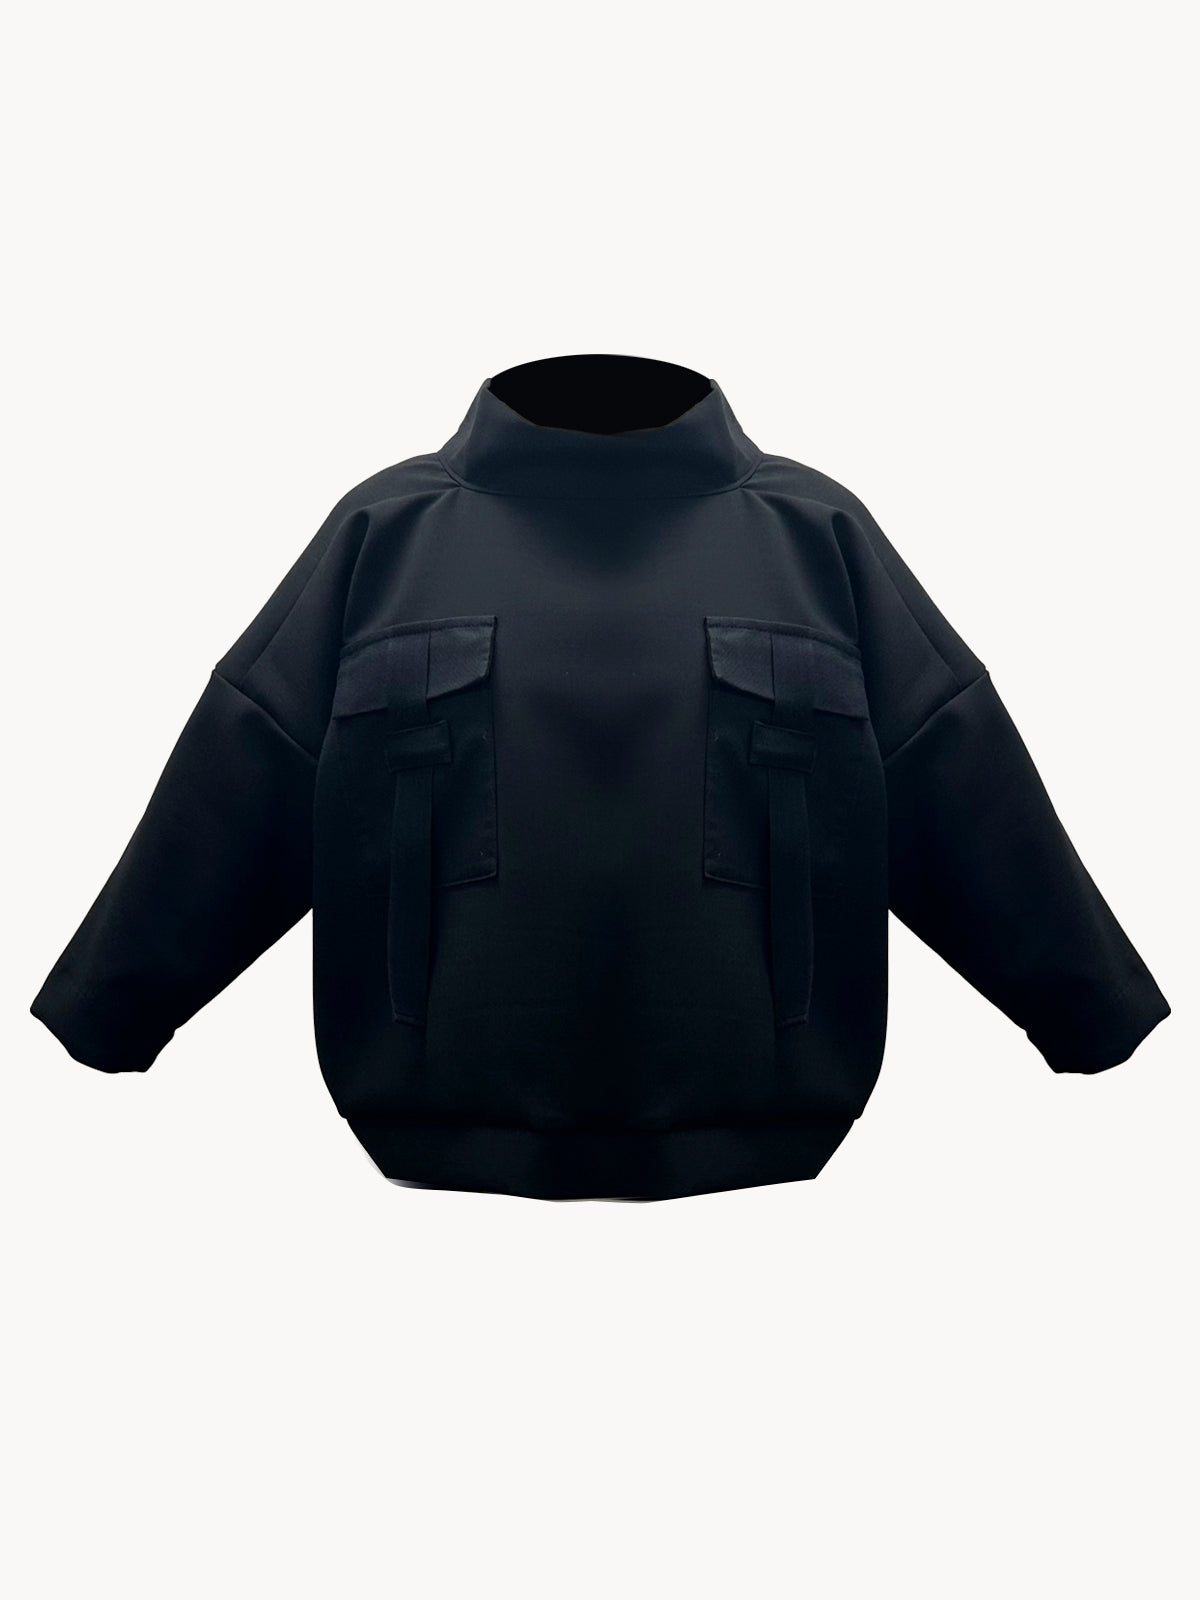 ZW black oversized women's sweater with pockets